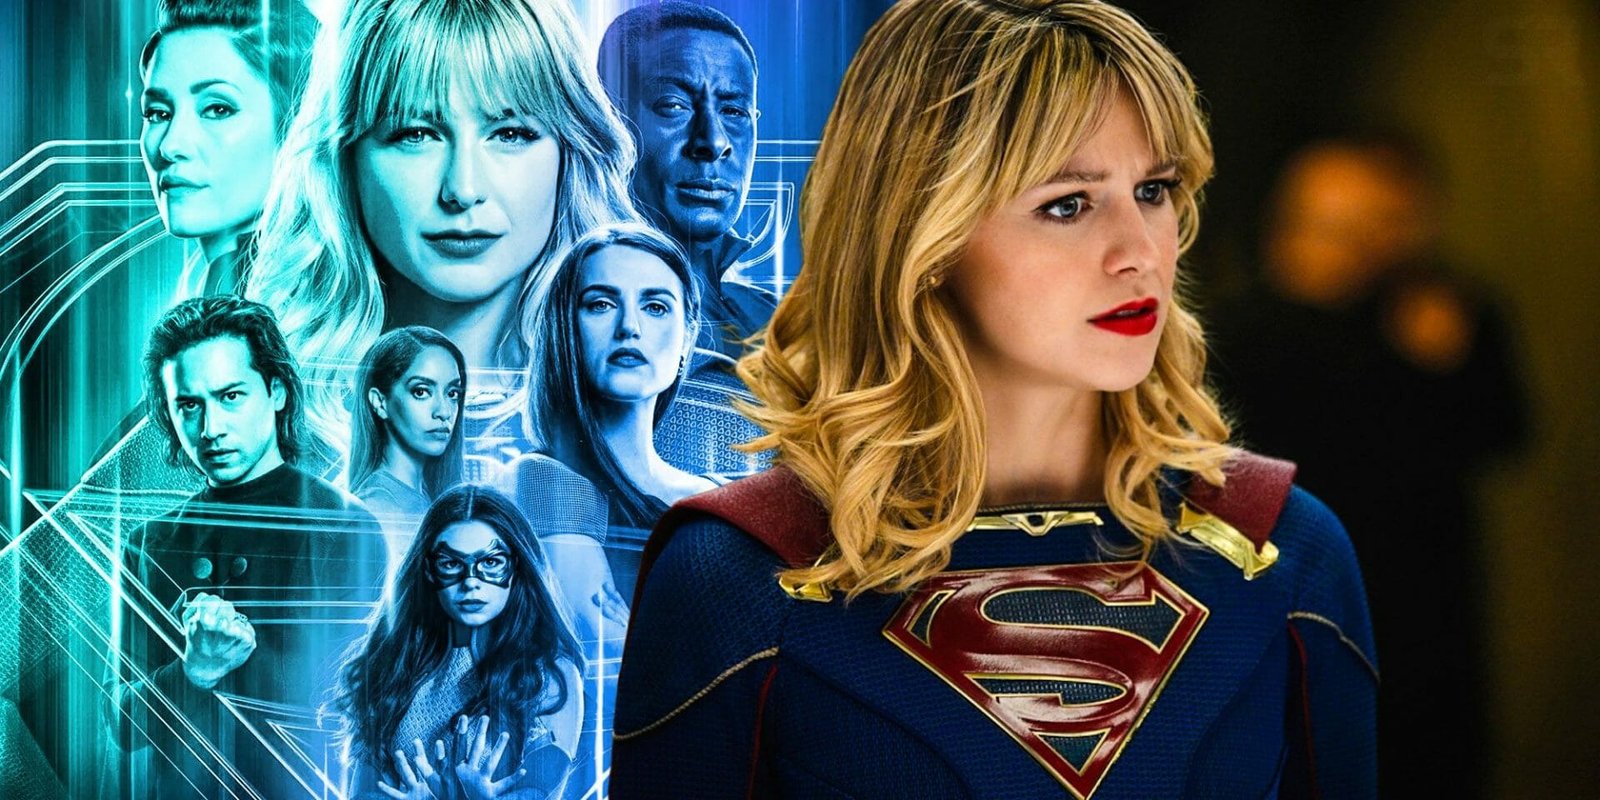 Supergirl Season 6 Poster